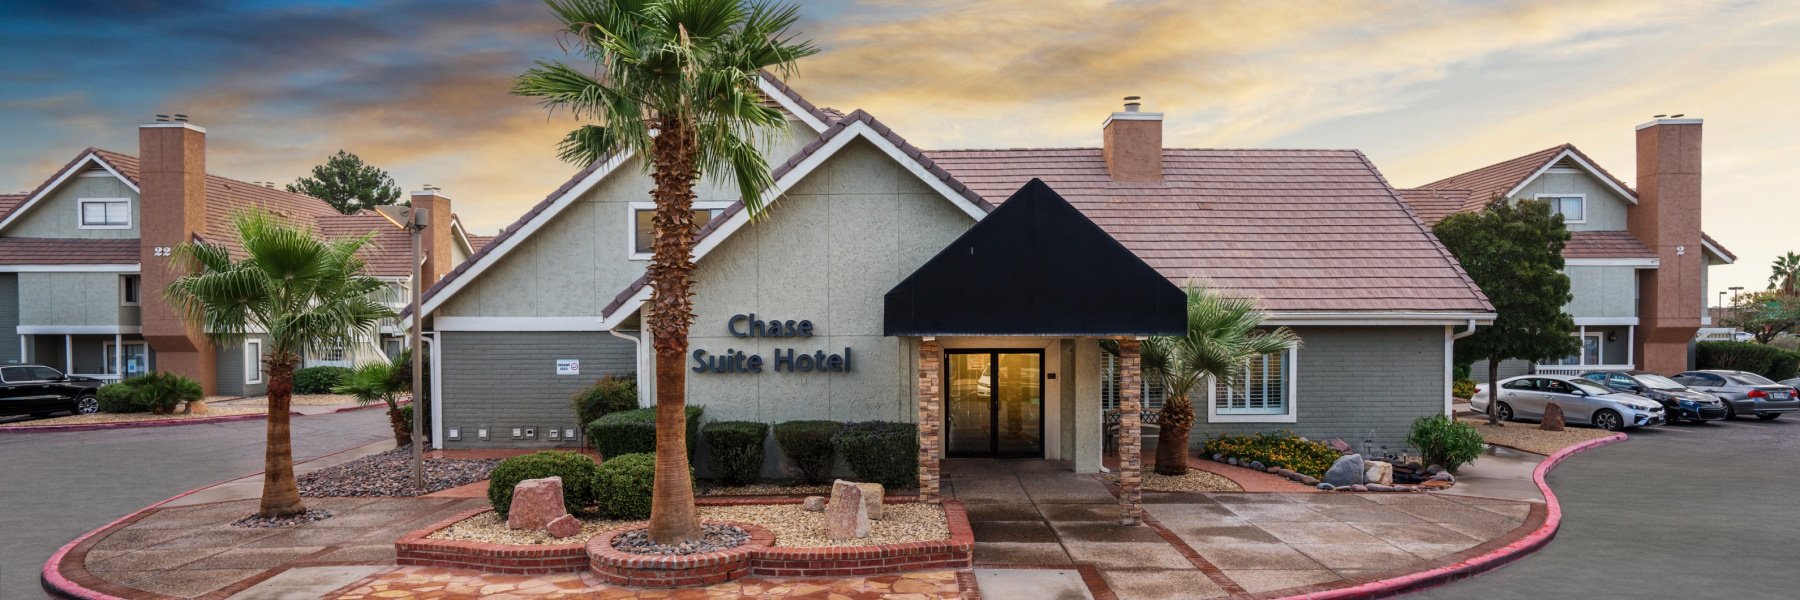 Sitemap, Chase Hotel Suite- El Paso, Texas